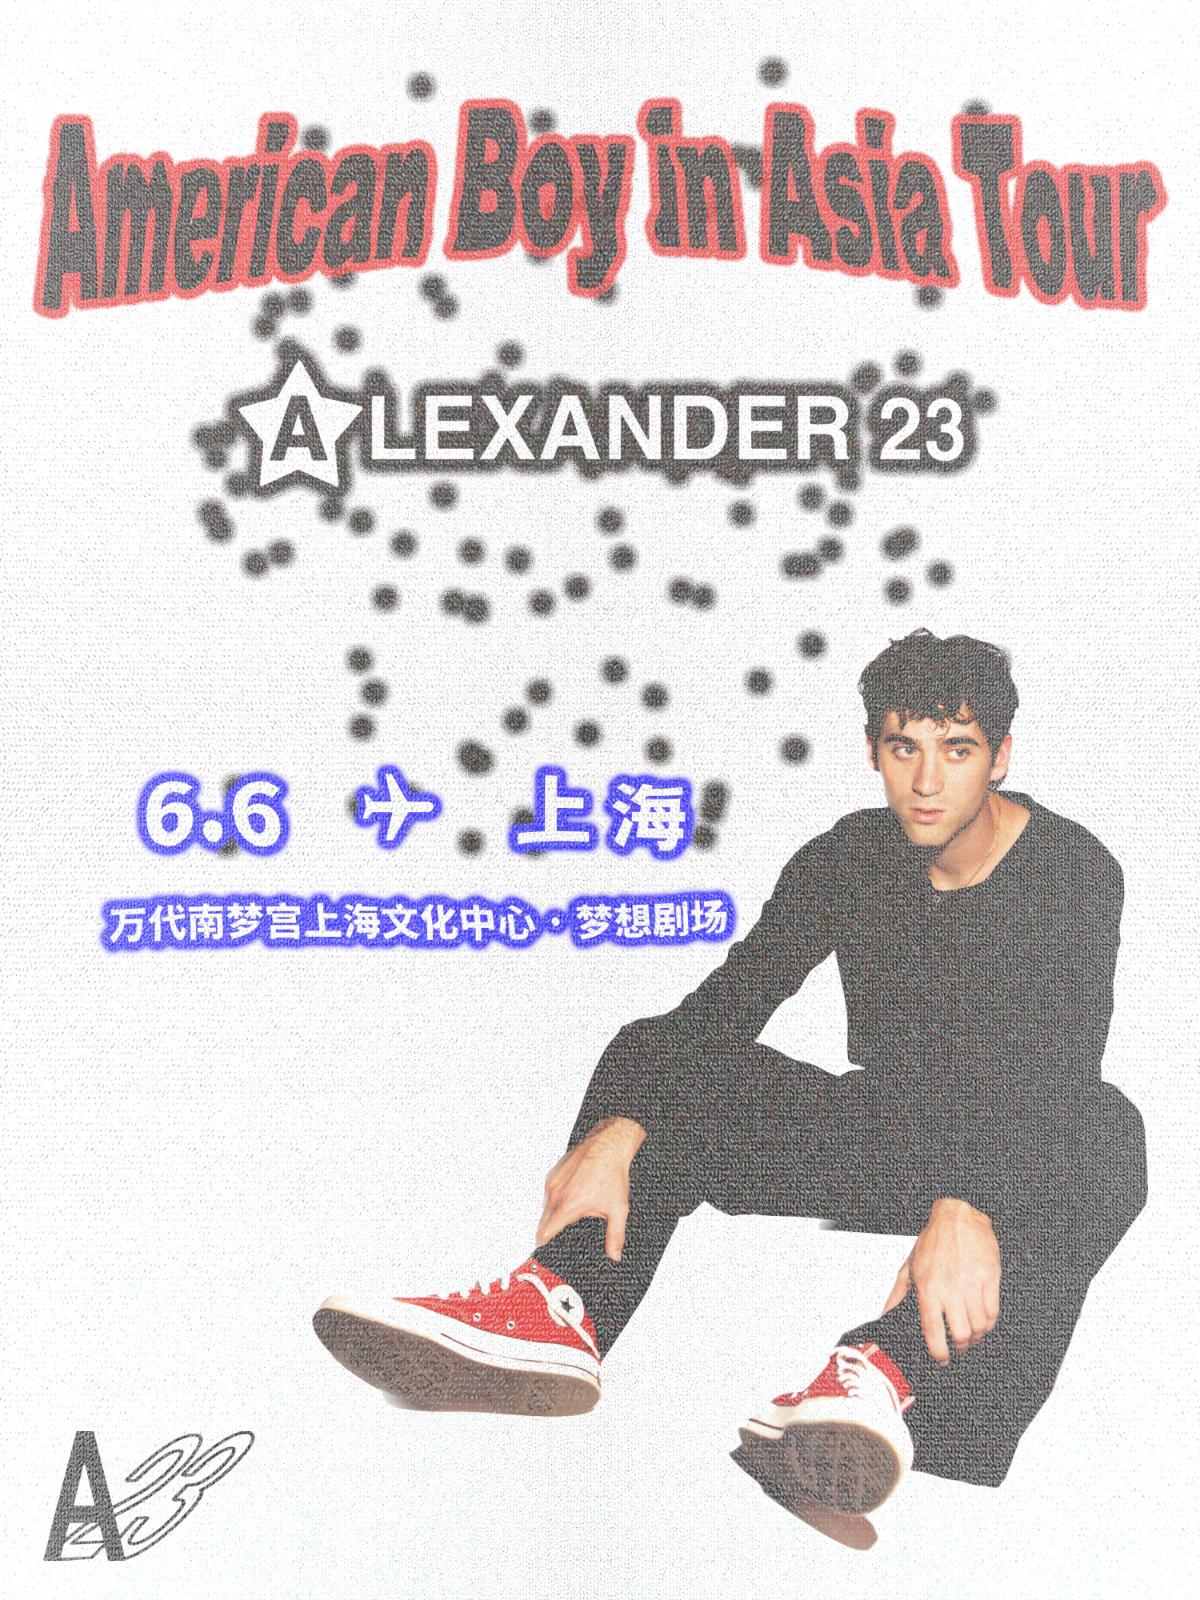 Alexander 23演唱会-上海